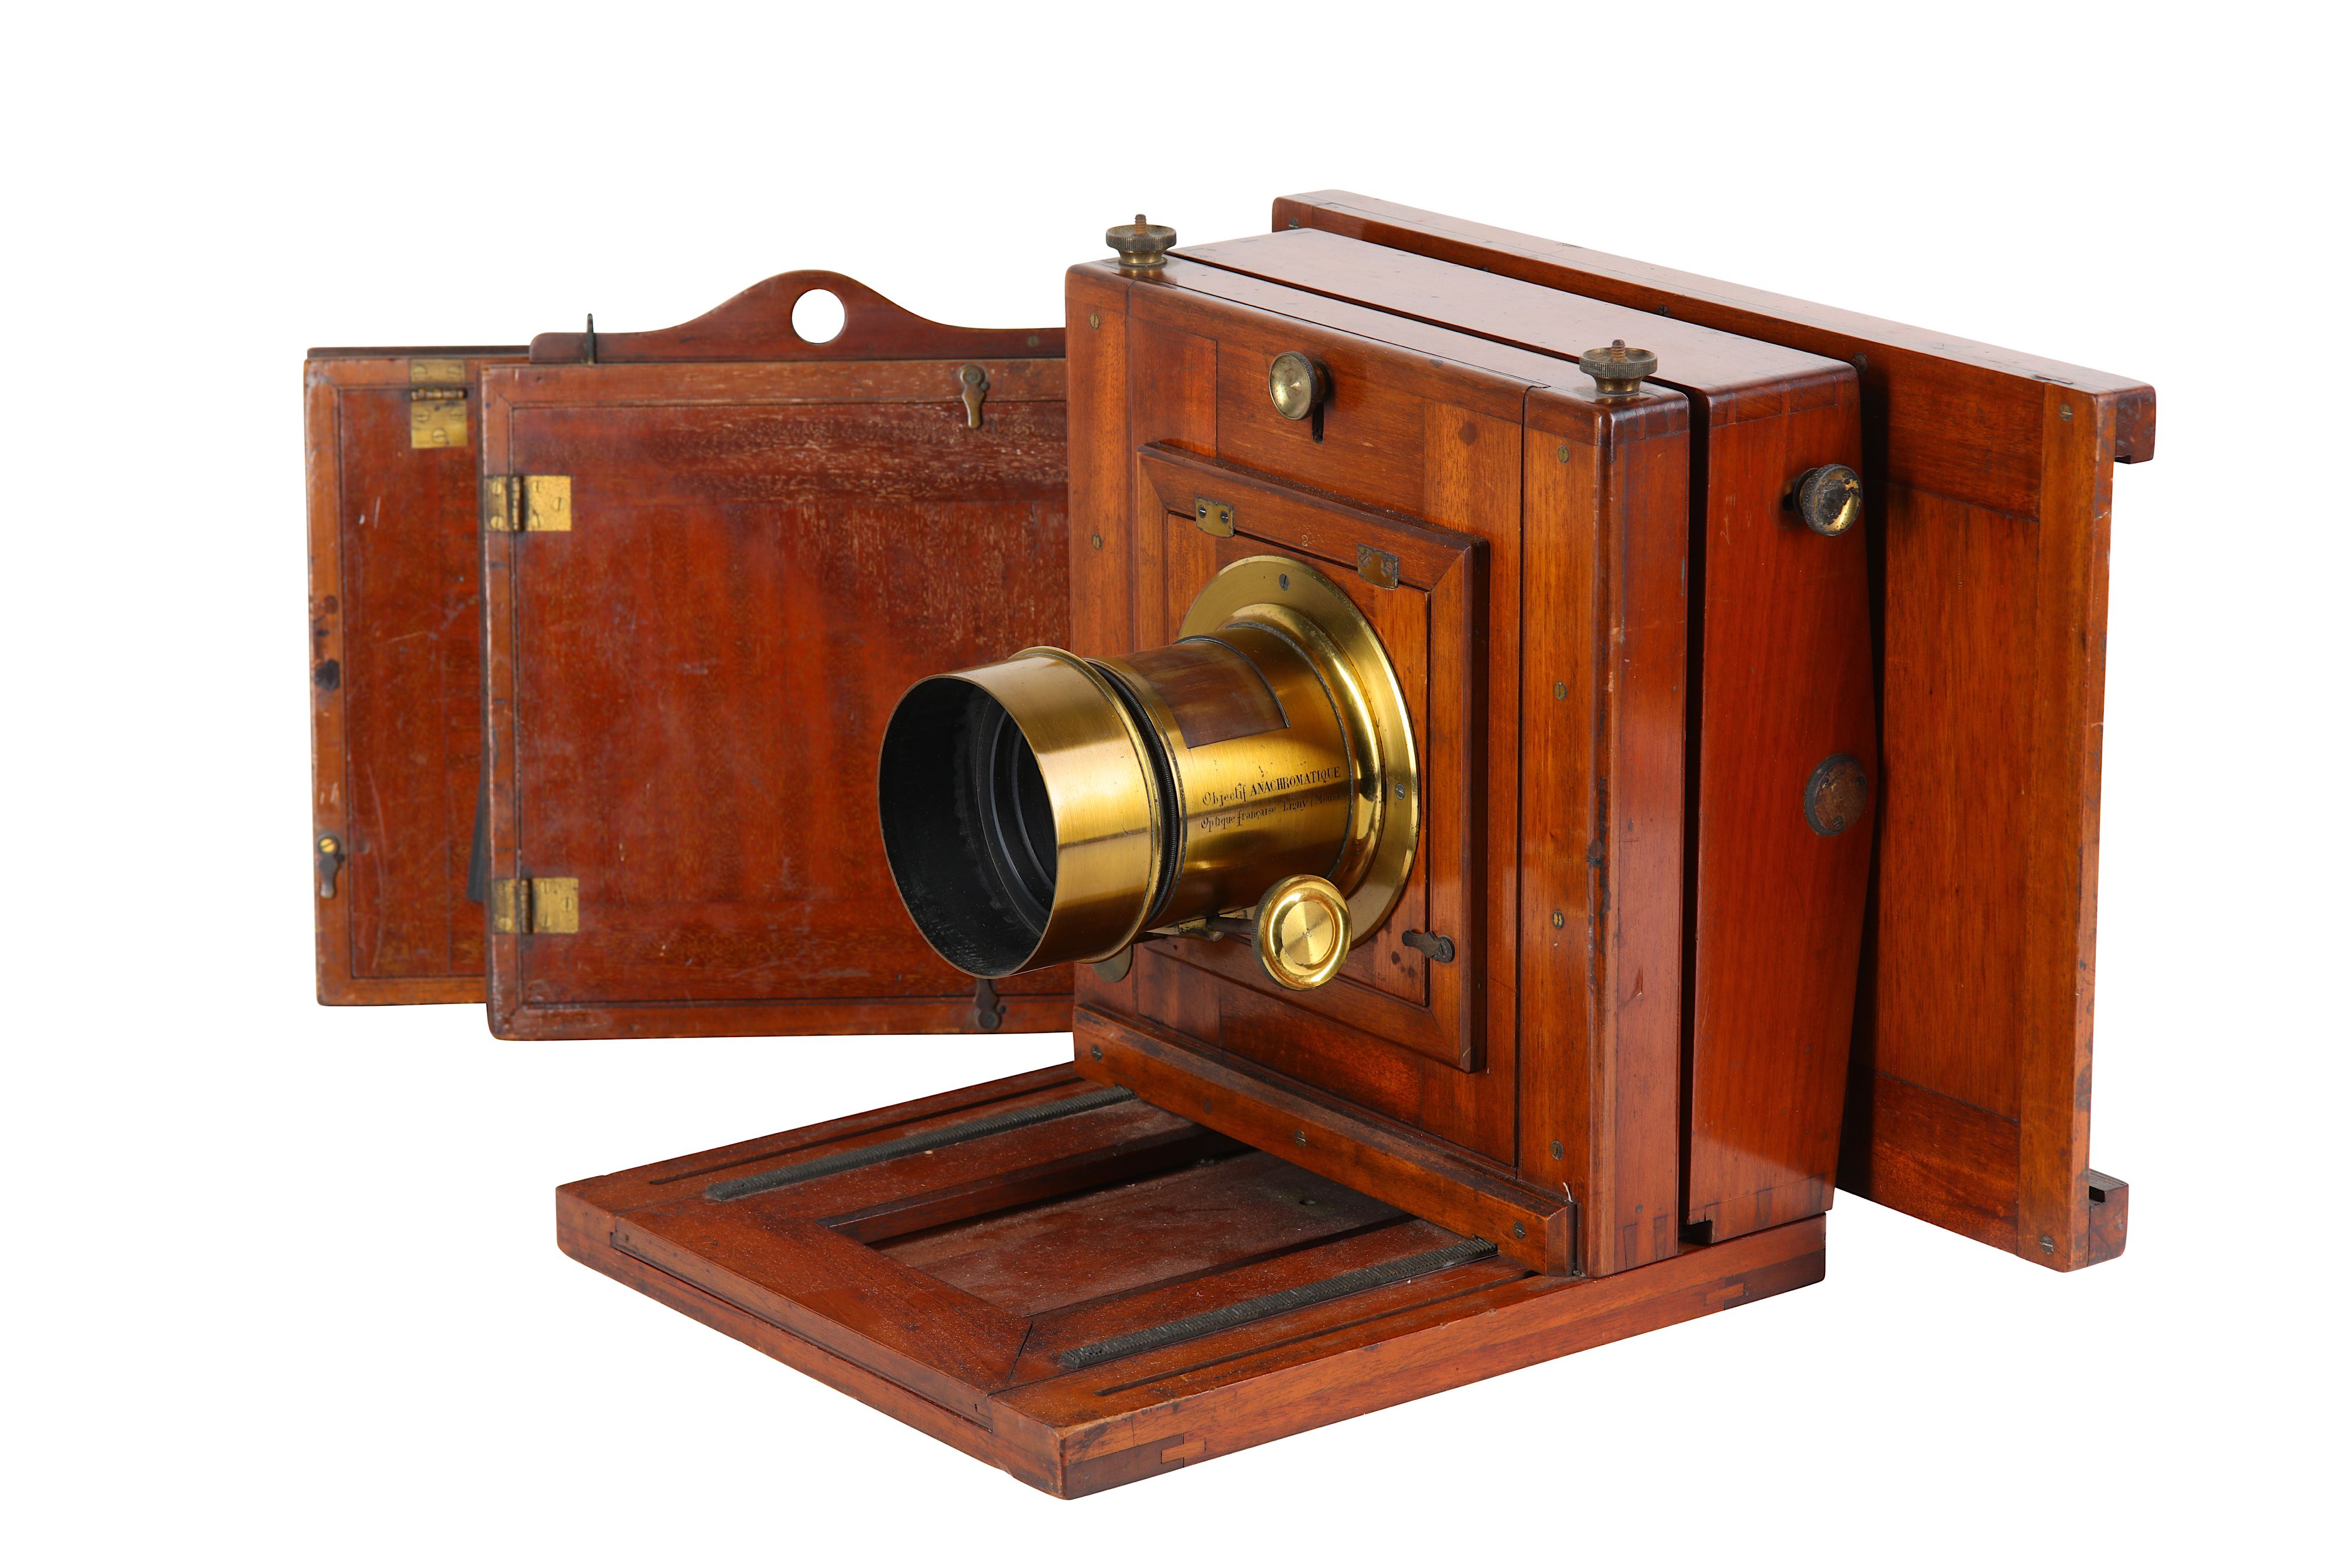 A Whole Plate Mahogany Studio Camera with Anachromatic Brass Lens